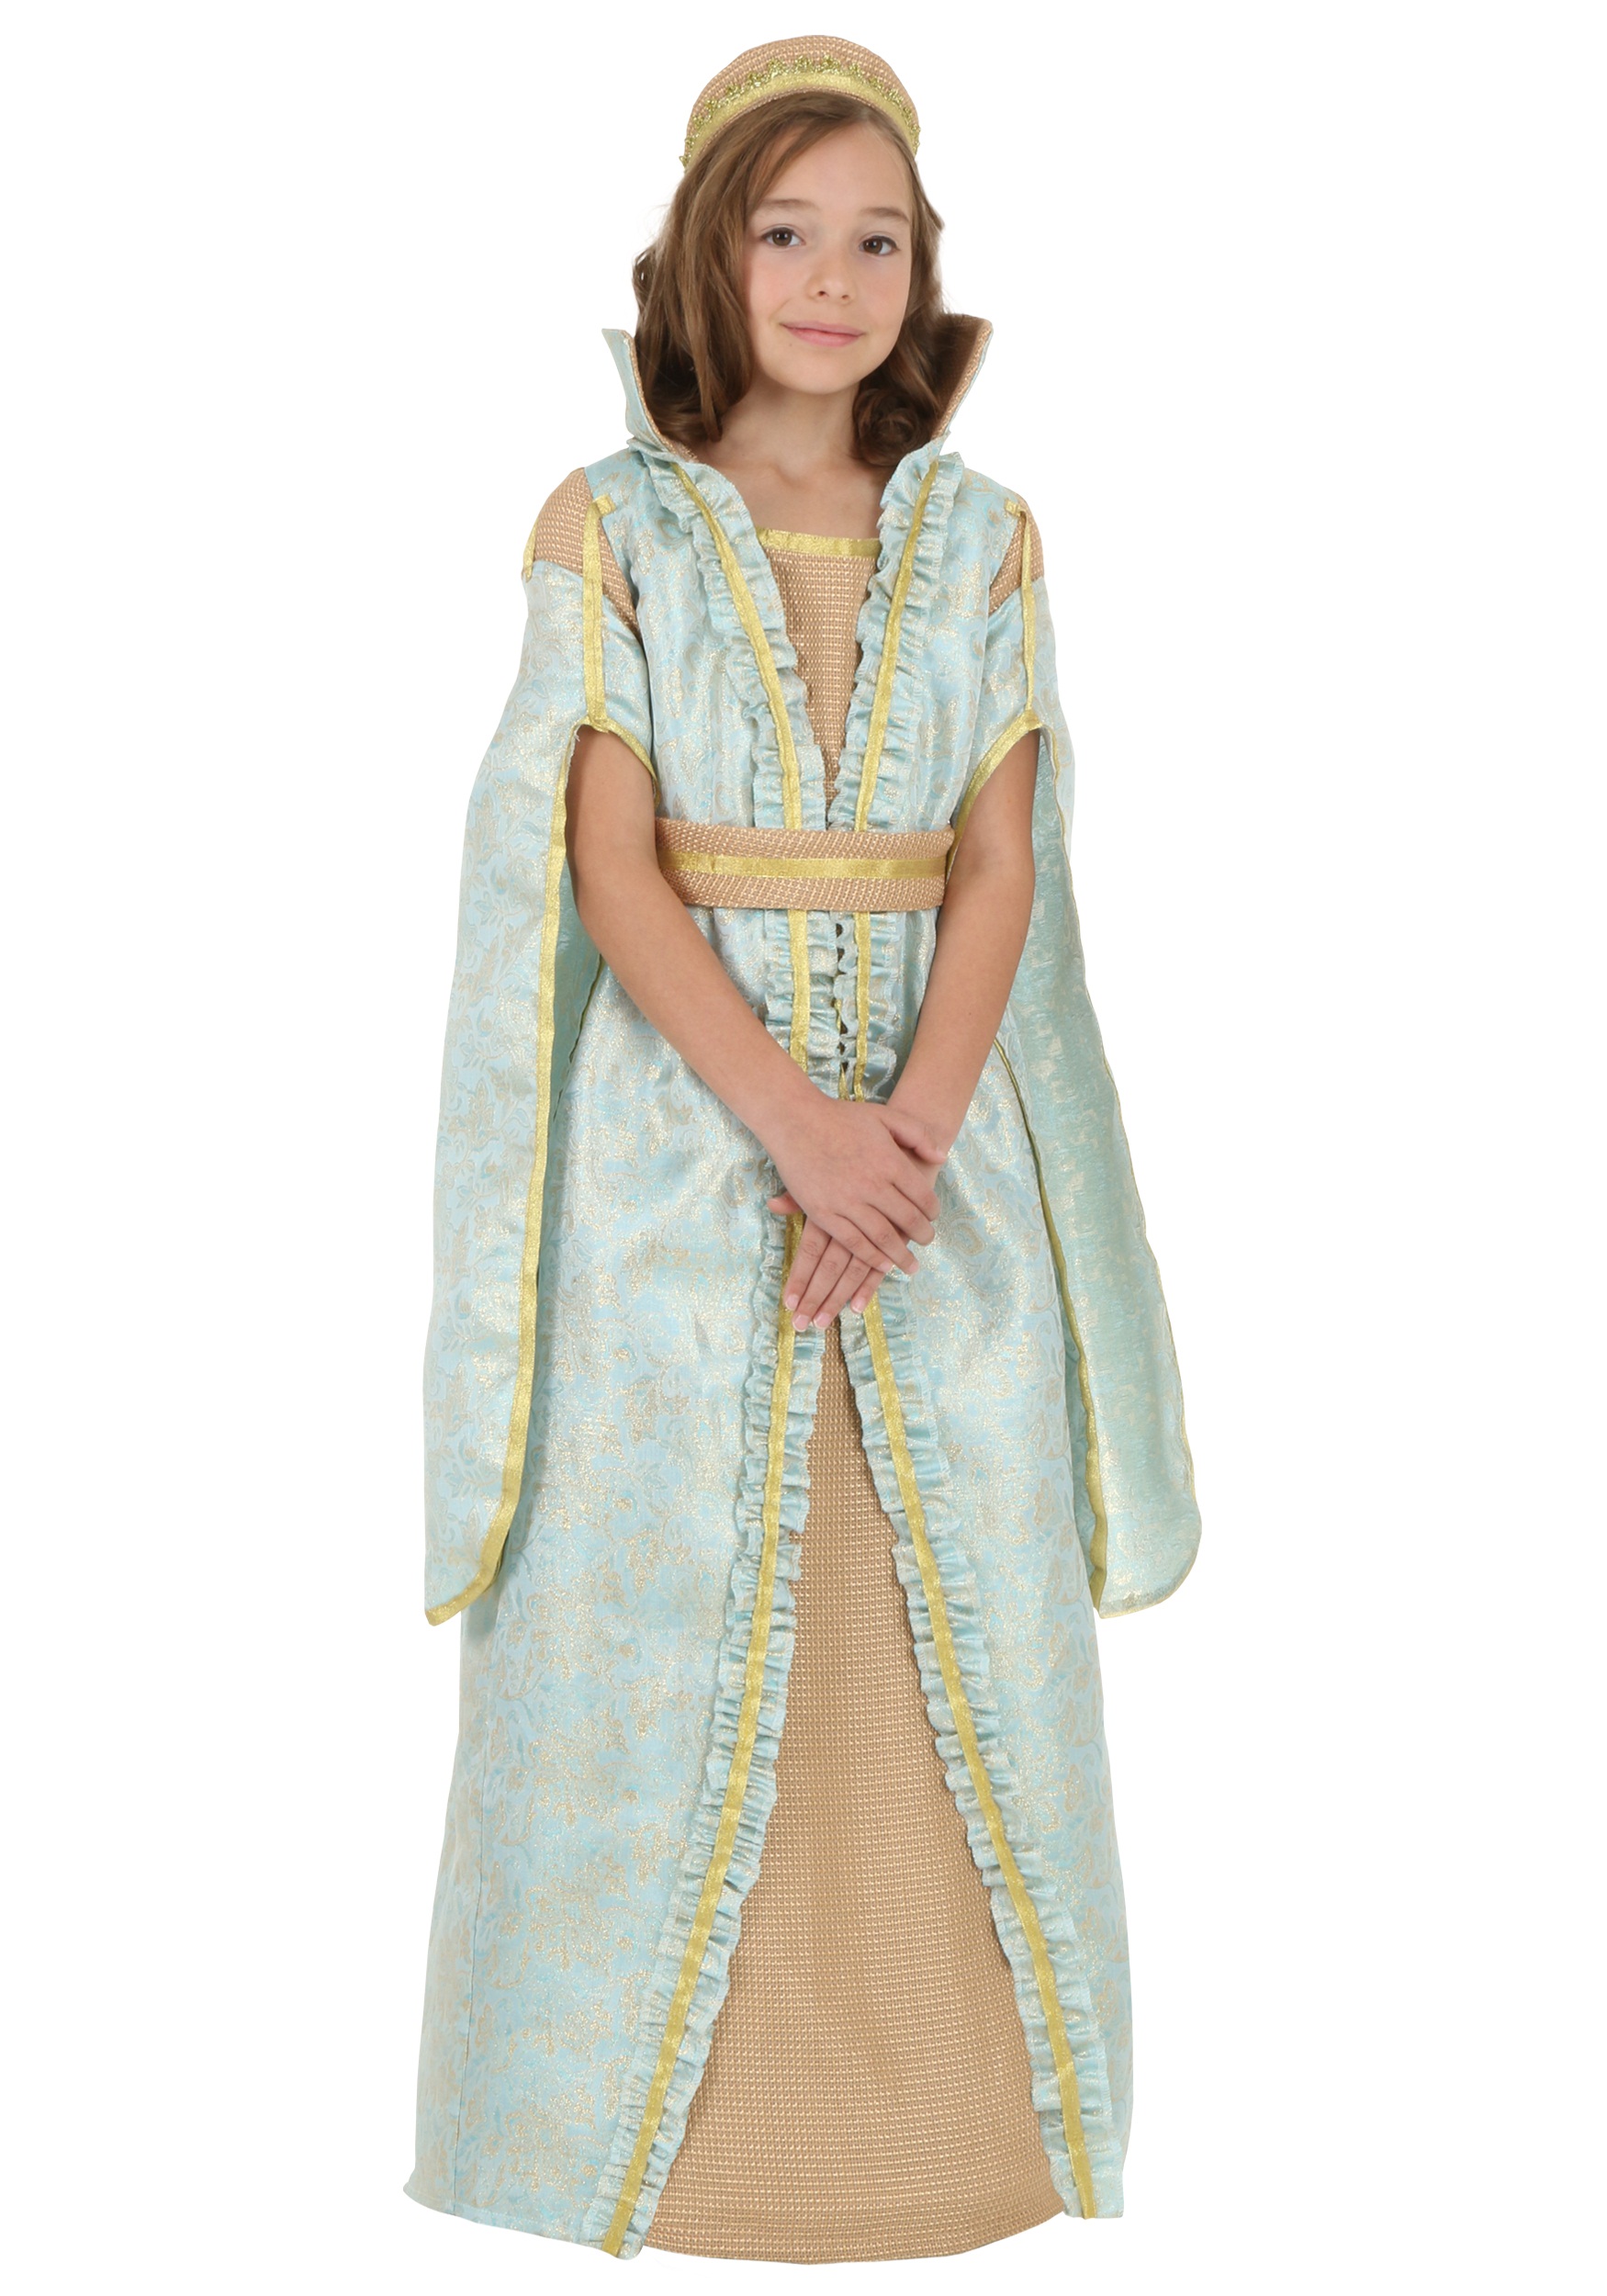 medieval costumes children